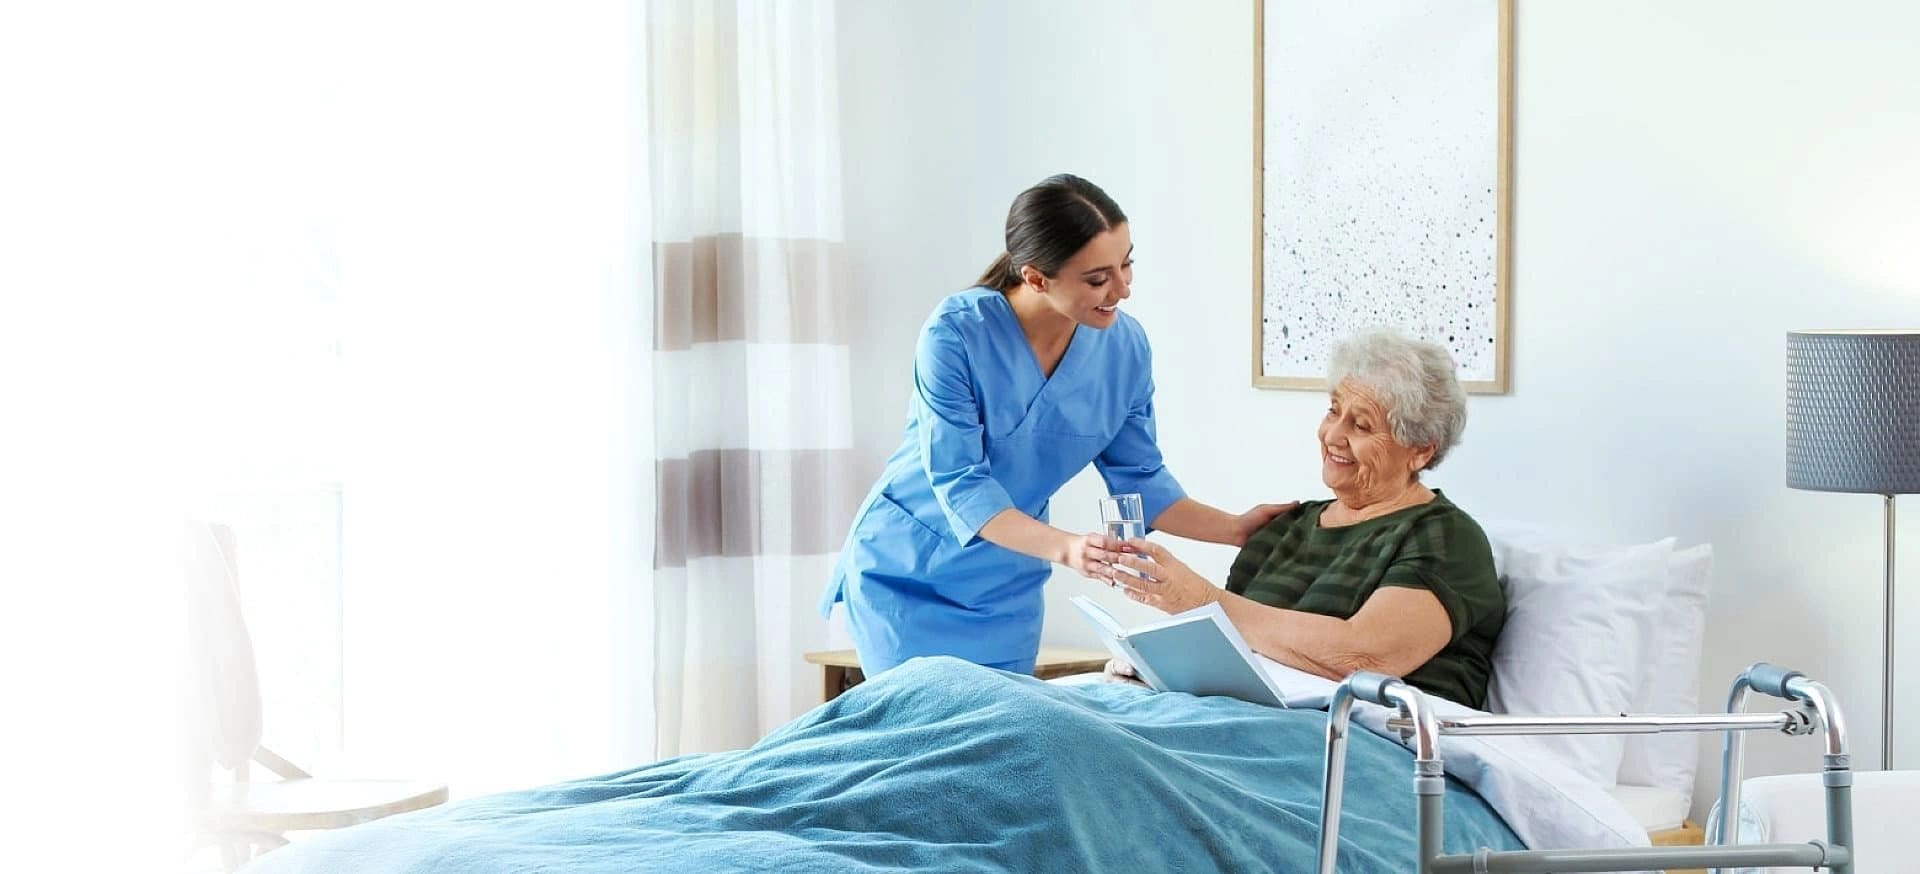 A nurse is helping an elderly patient in bed.